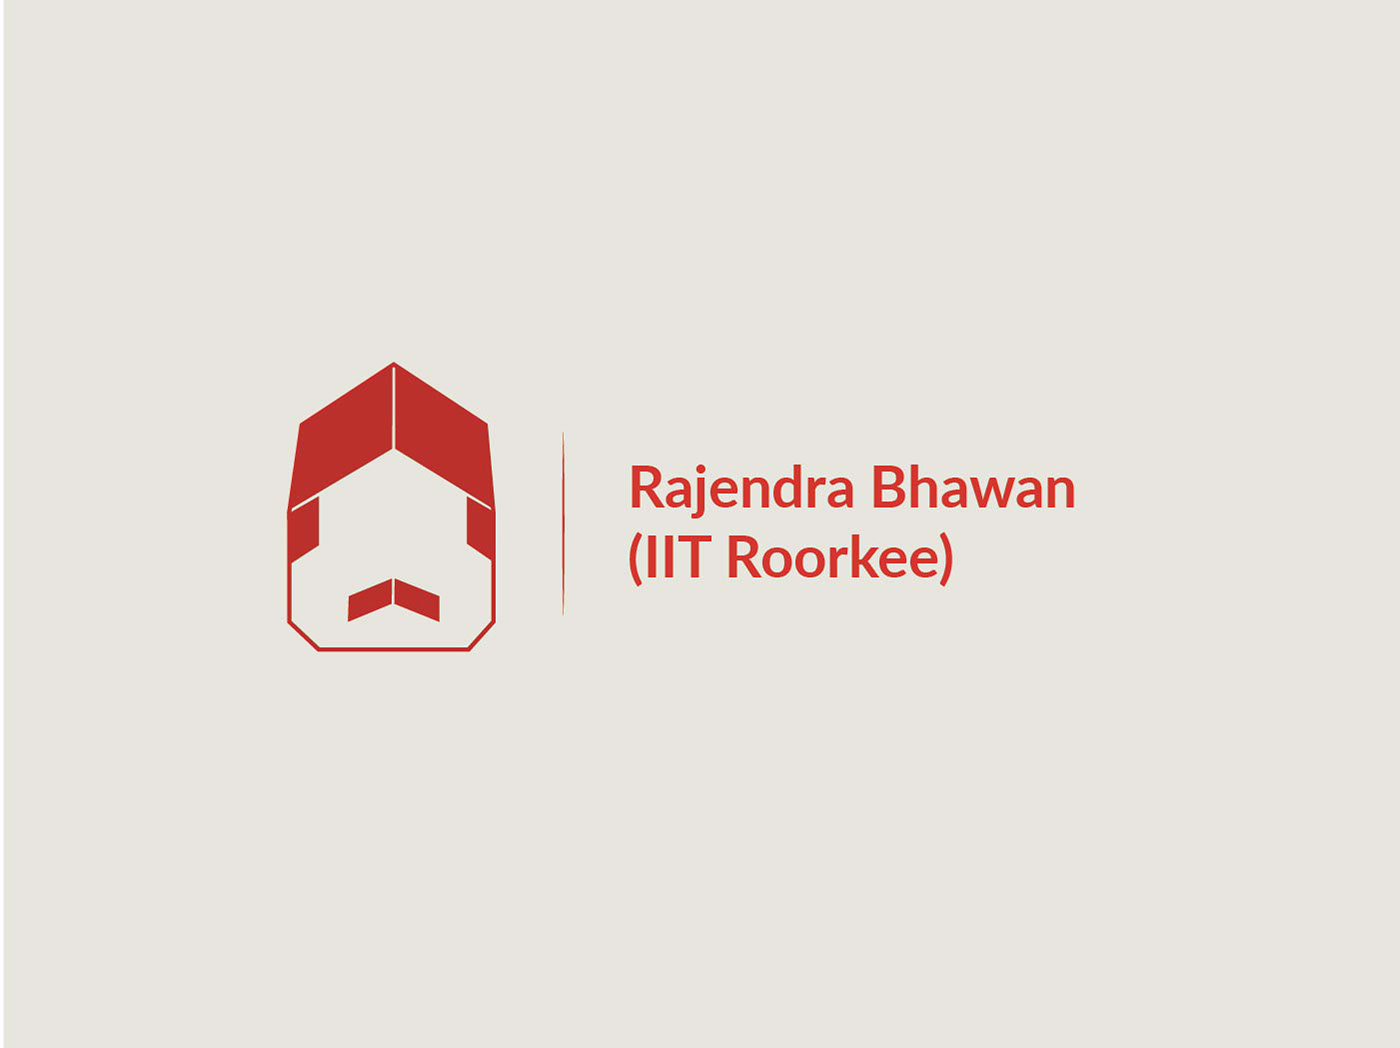 iit roorkee logo design rajendra prasad bhawan hostel rjb nikhil Yadav